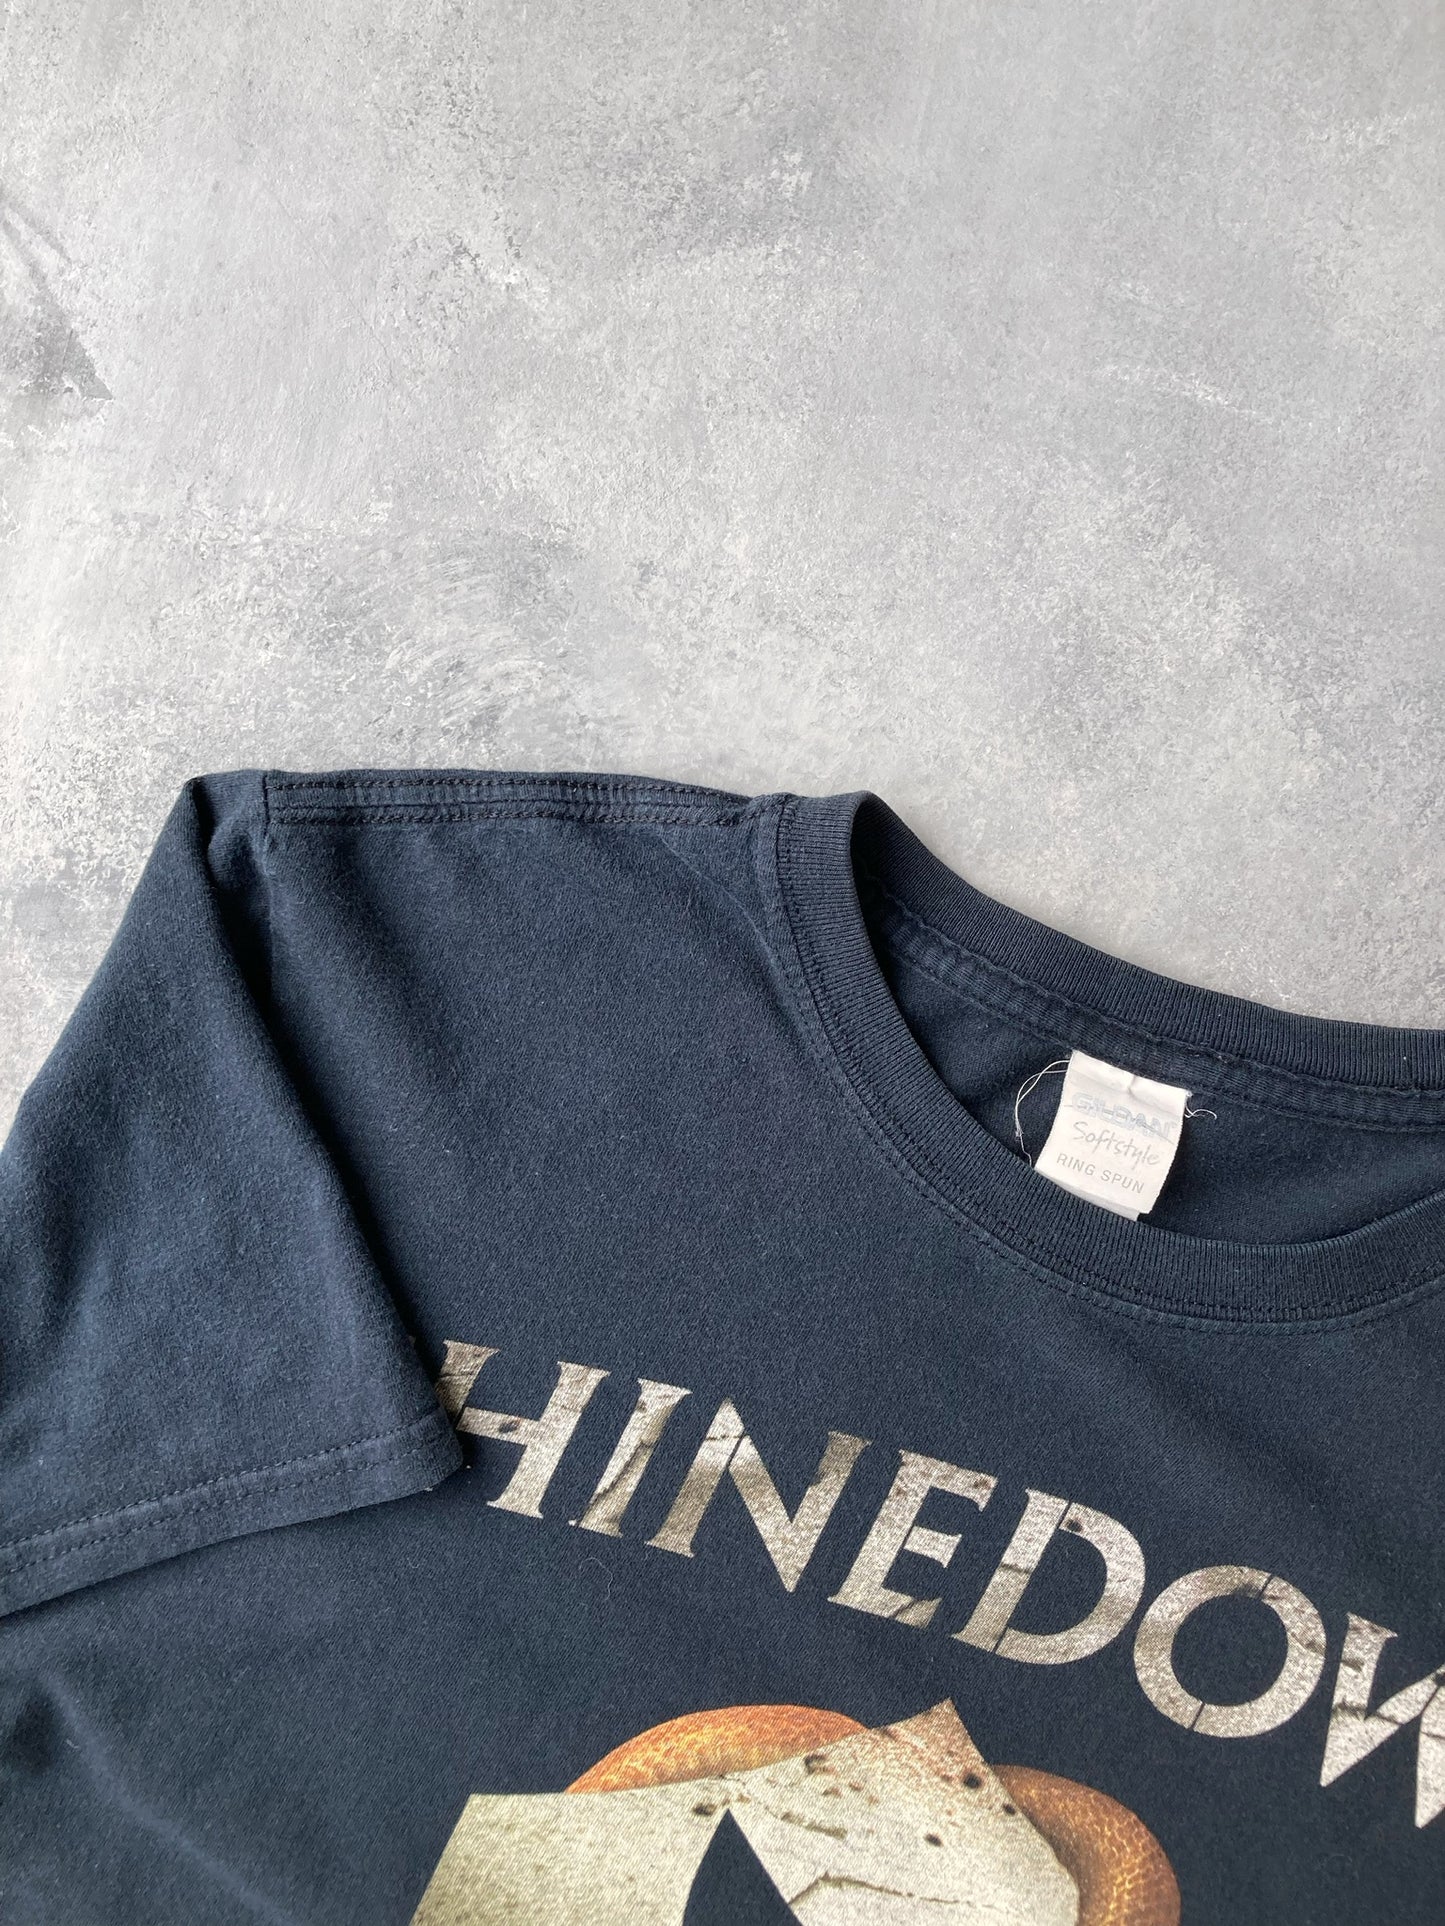 Shinedown Tour T-Shirt - Medium